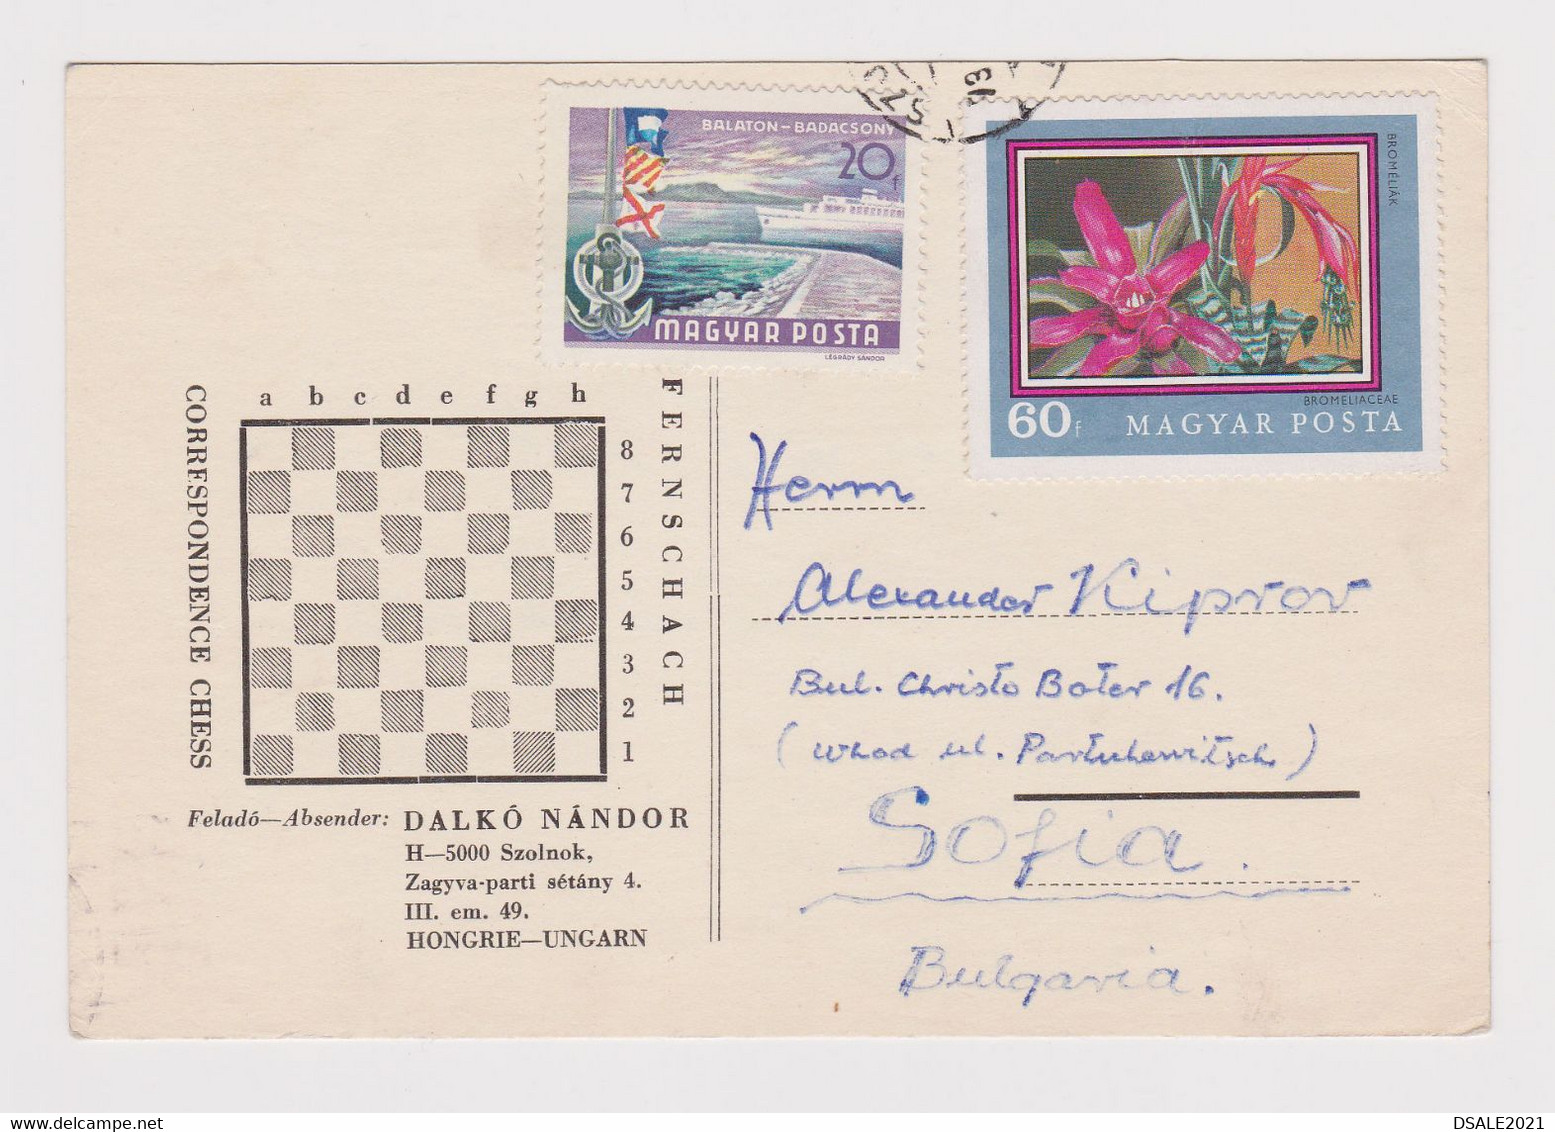 Hungary Ungarn Ungheria Hongrie 1973 Chess Card W/Topic Stamps Lake Balaton, Flower (Bromeliad) Sent To Bulgaria /39640 - Cartas & Documentos